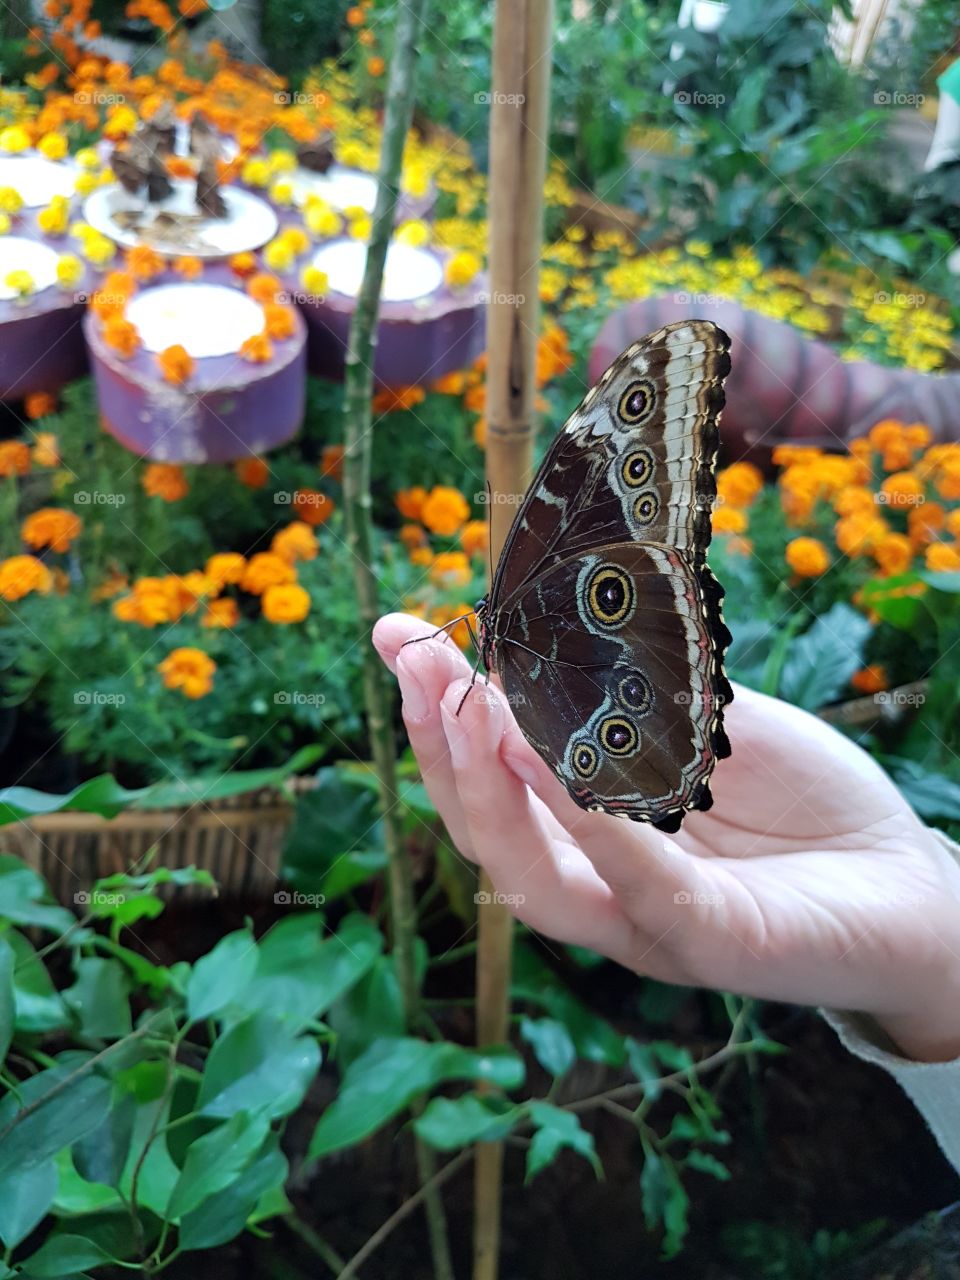 Butterfly Garden , beautiful creation